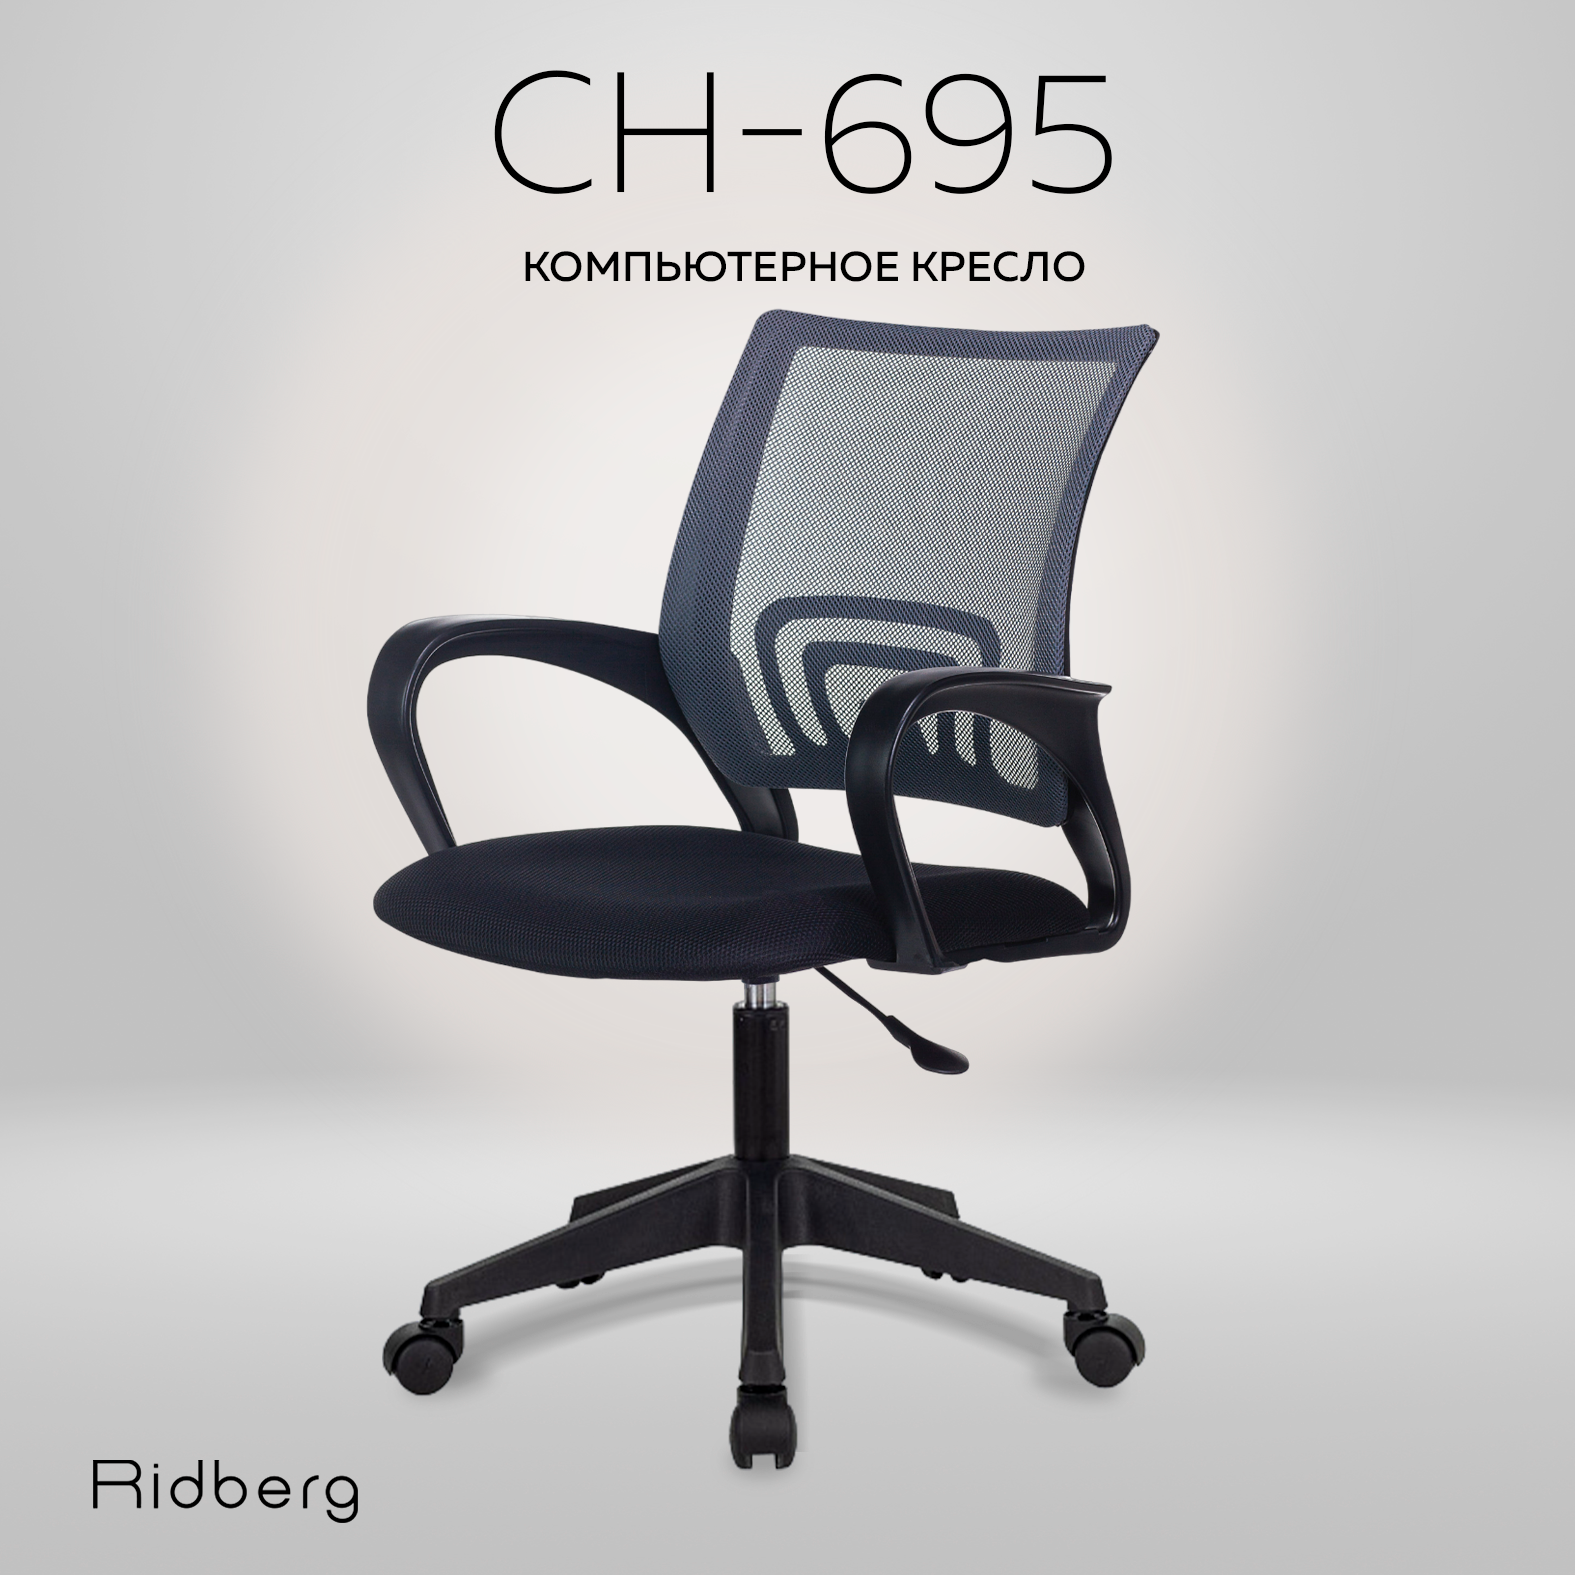 Детское кресло RIDBERG CH-695